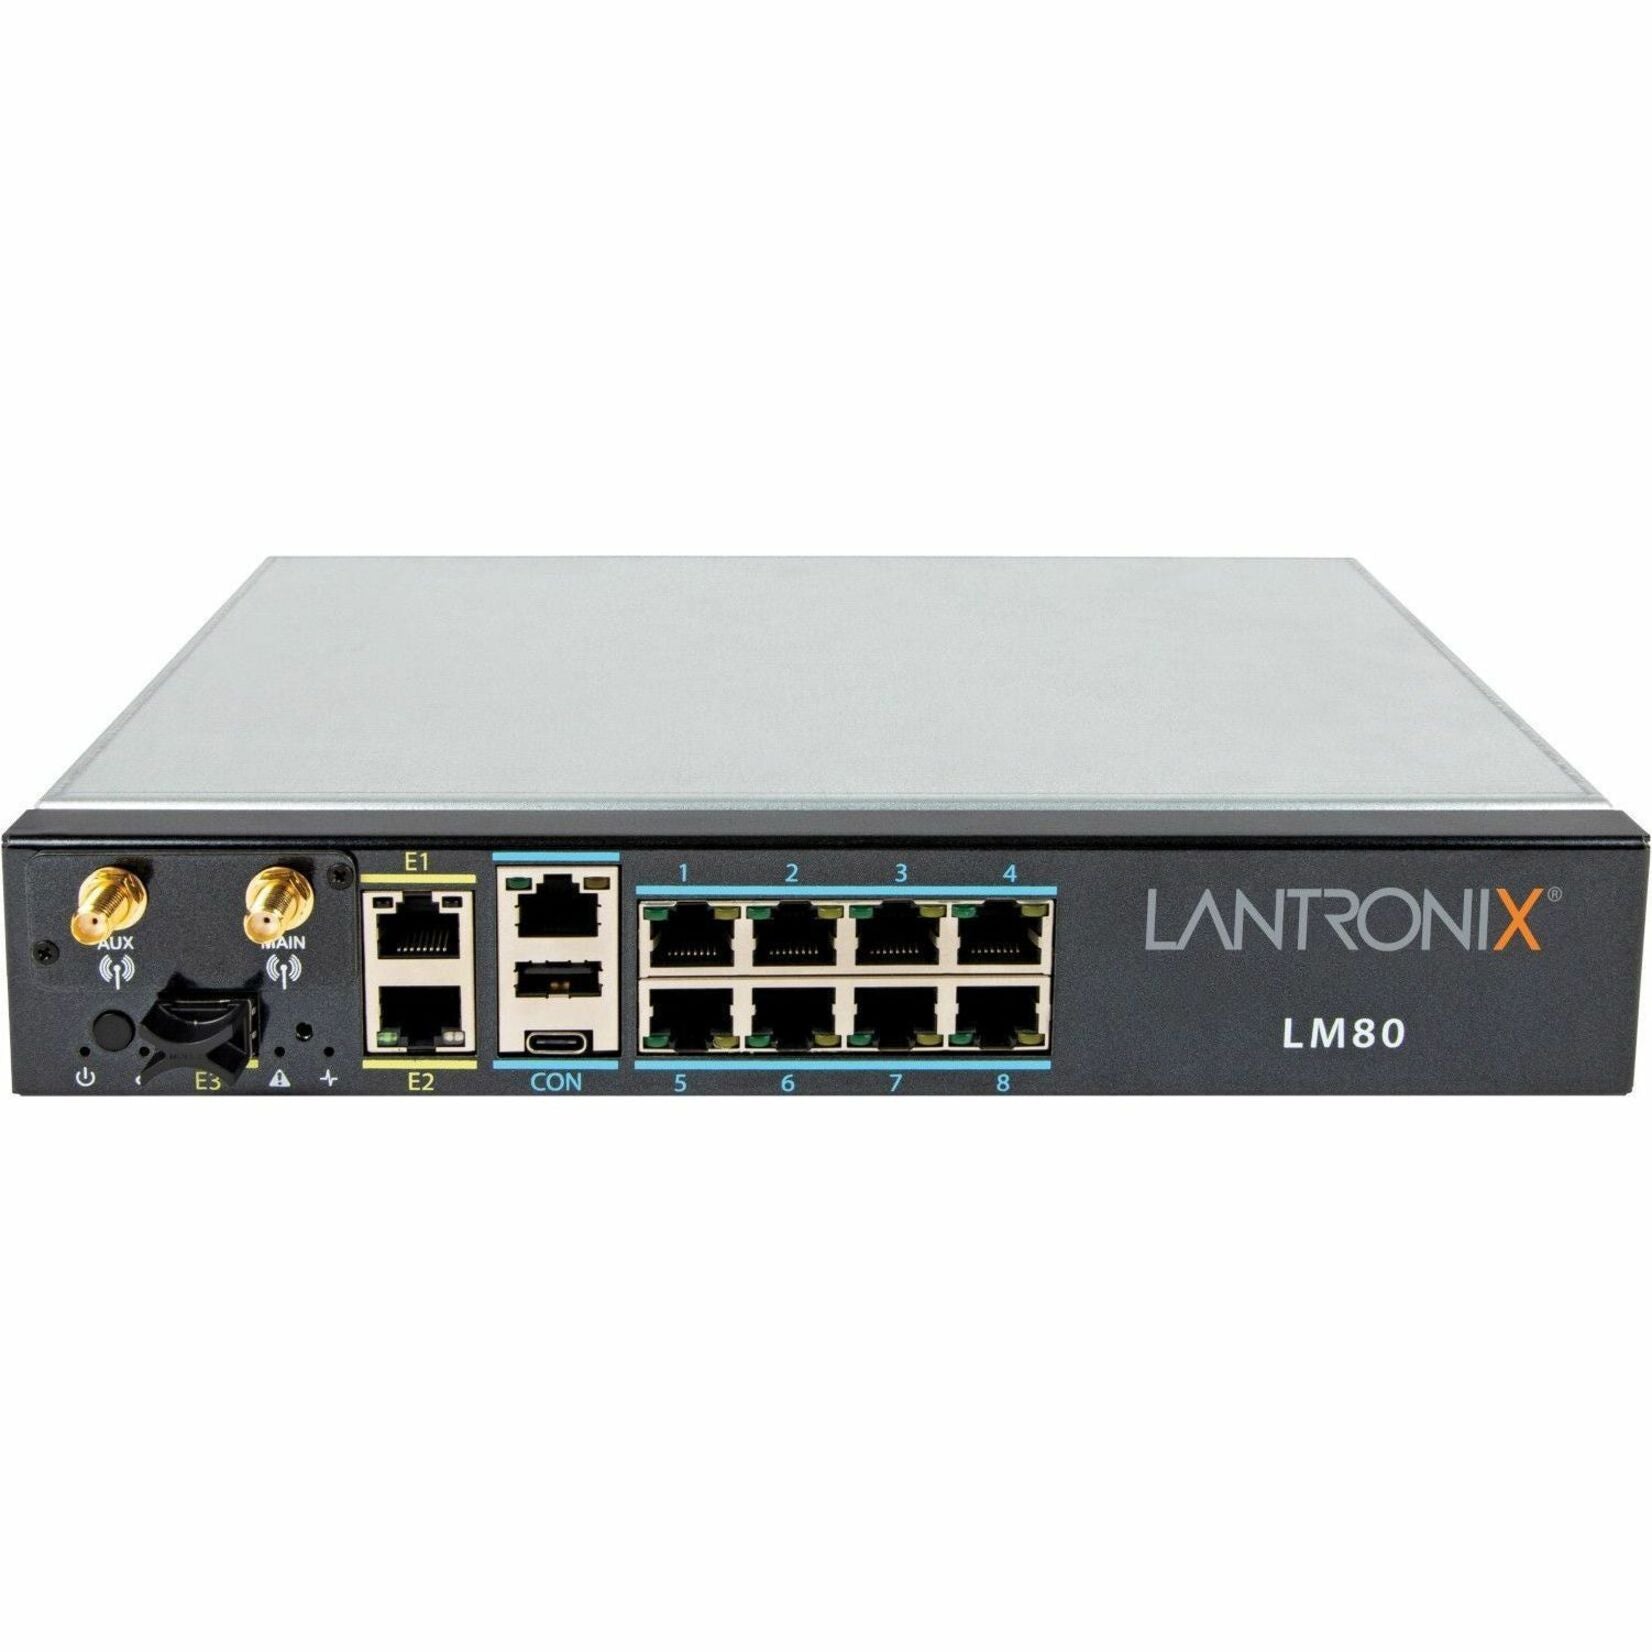 Lantronix LM 80-8S-NNN-NAA Infrastructure Management Equipment, TAA Compliant, Network Management